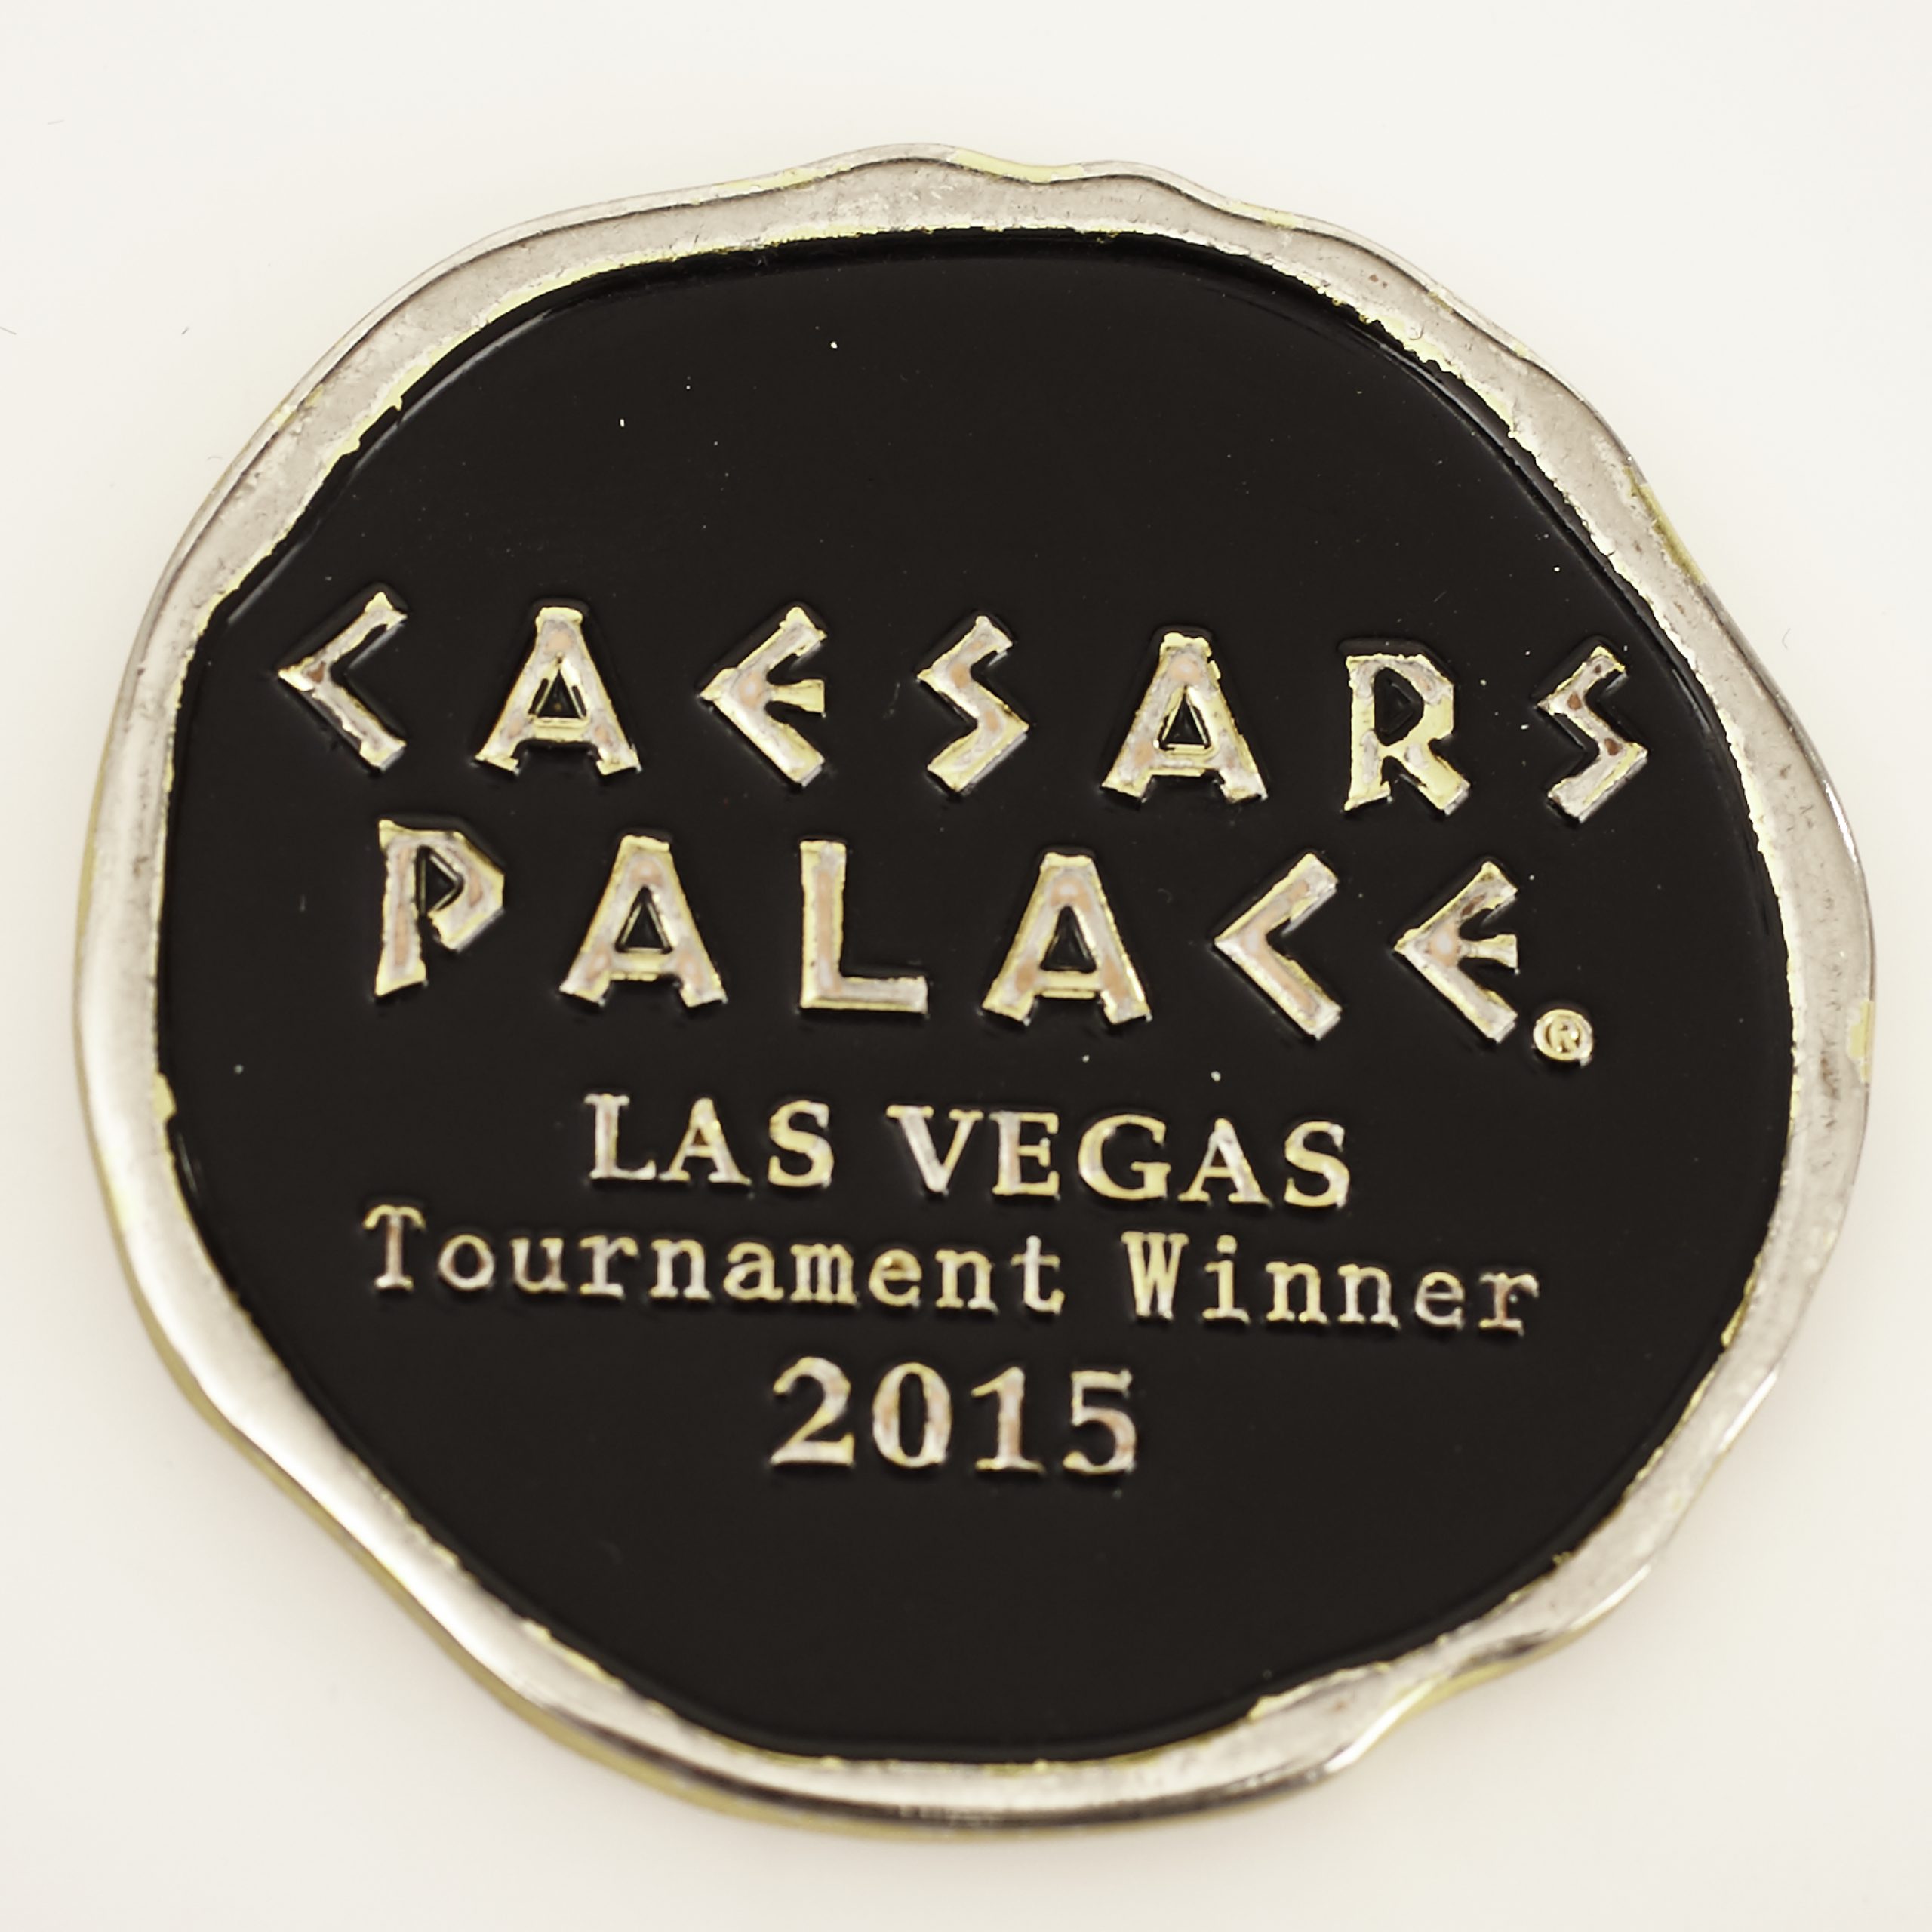 CAESARS PALACE, LAS VEGAS, TOURNAMENT WINNER 2015, Poker Card Guard